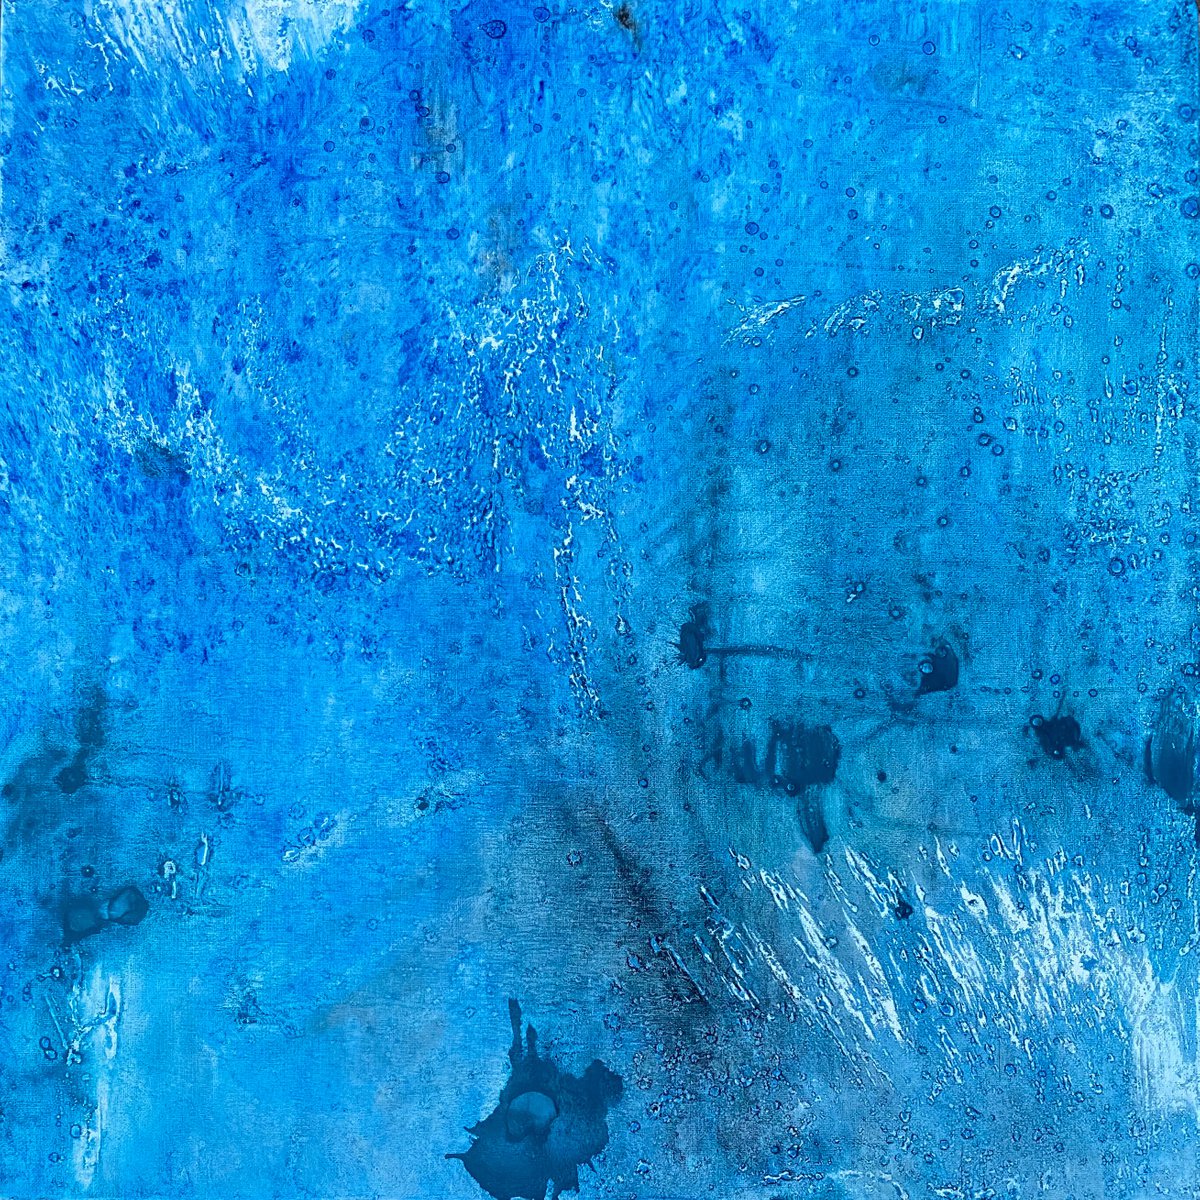 Blue abstract painting 2205202012 by Natalya Burgos